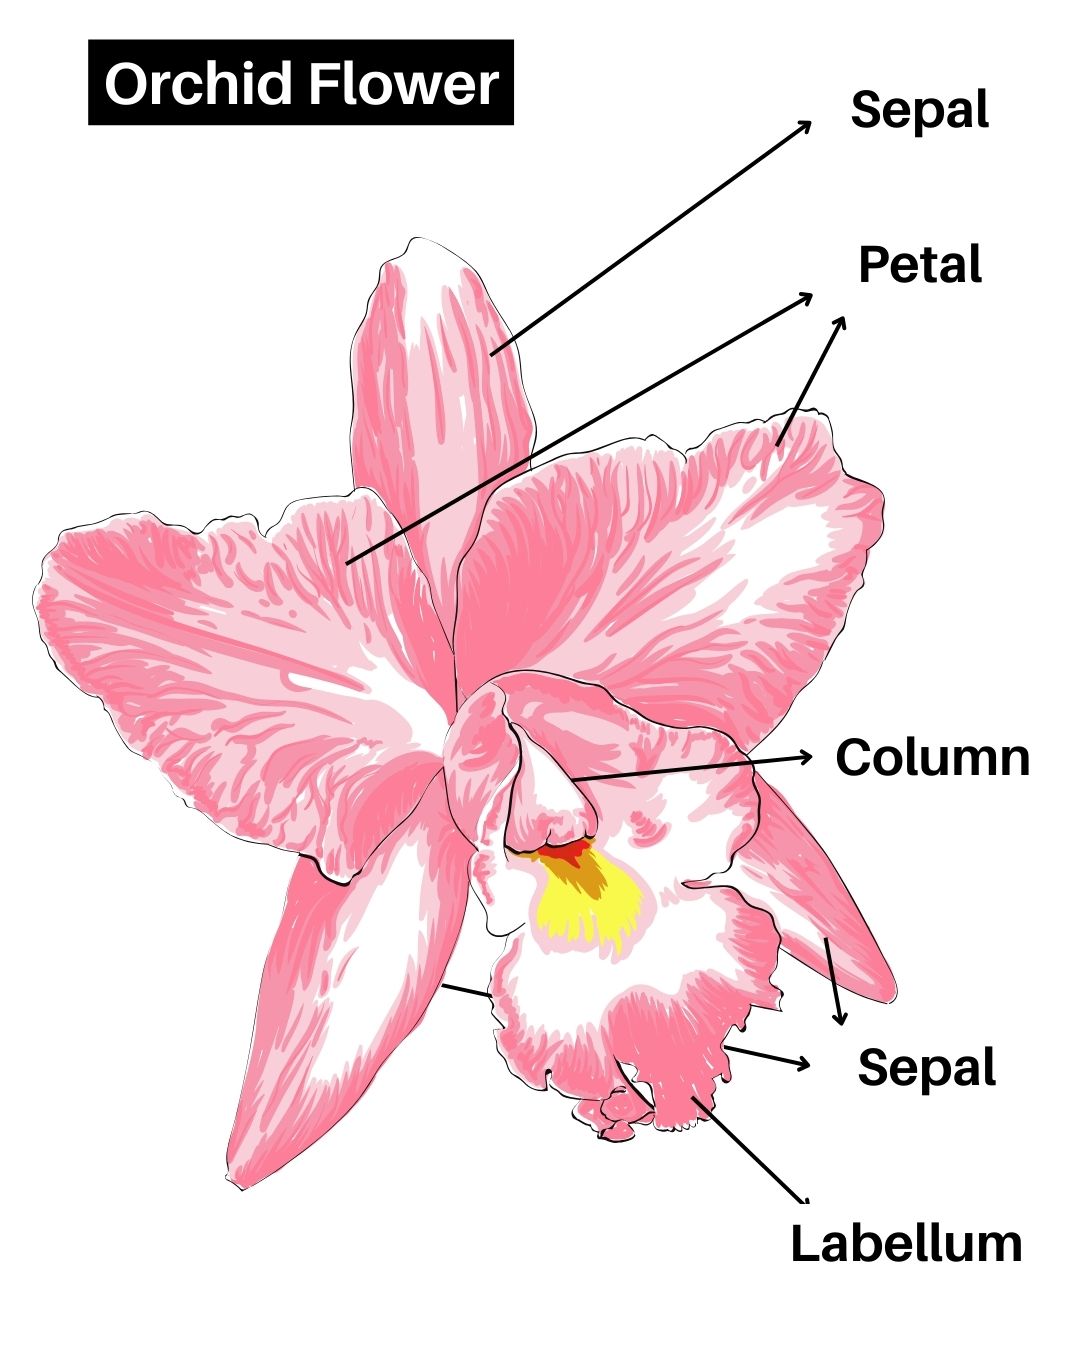 Orchid flower morphology